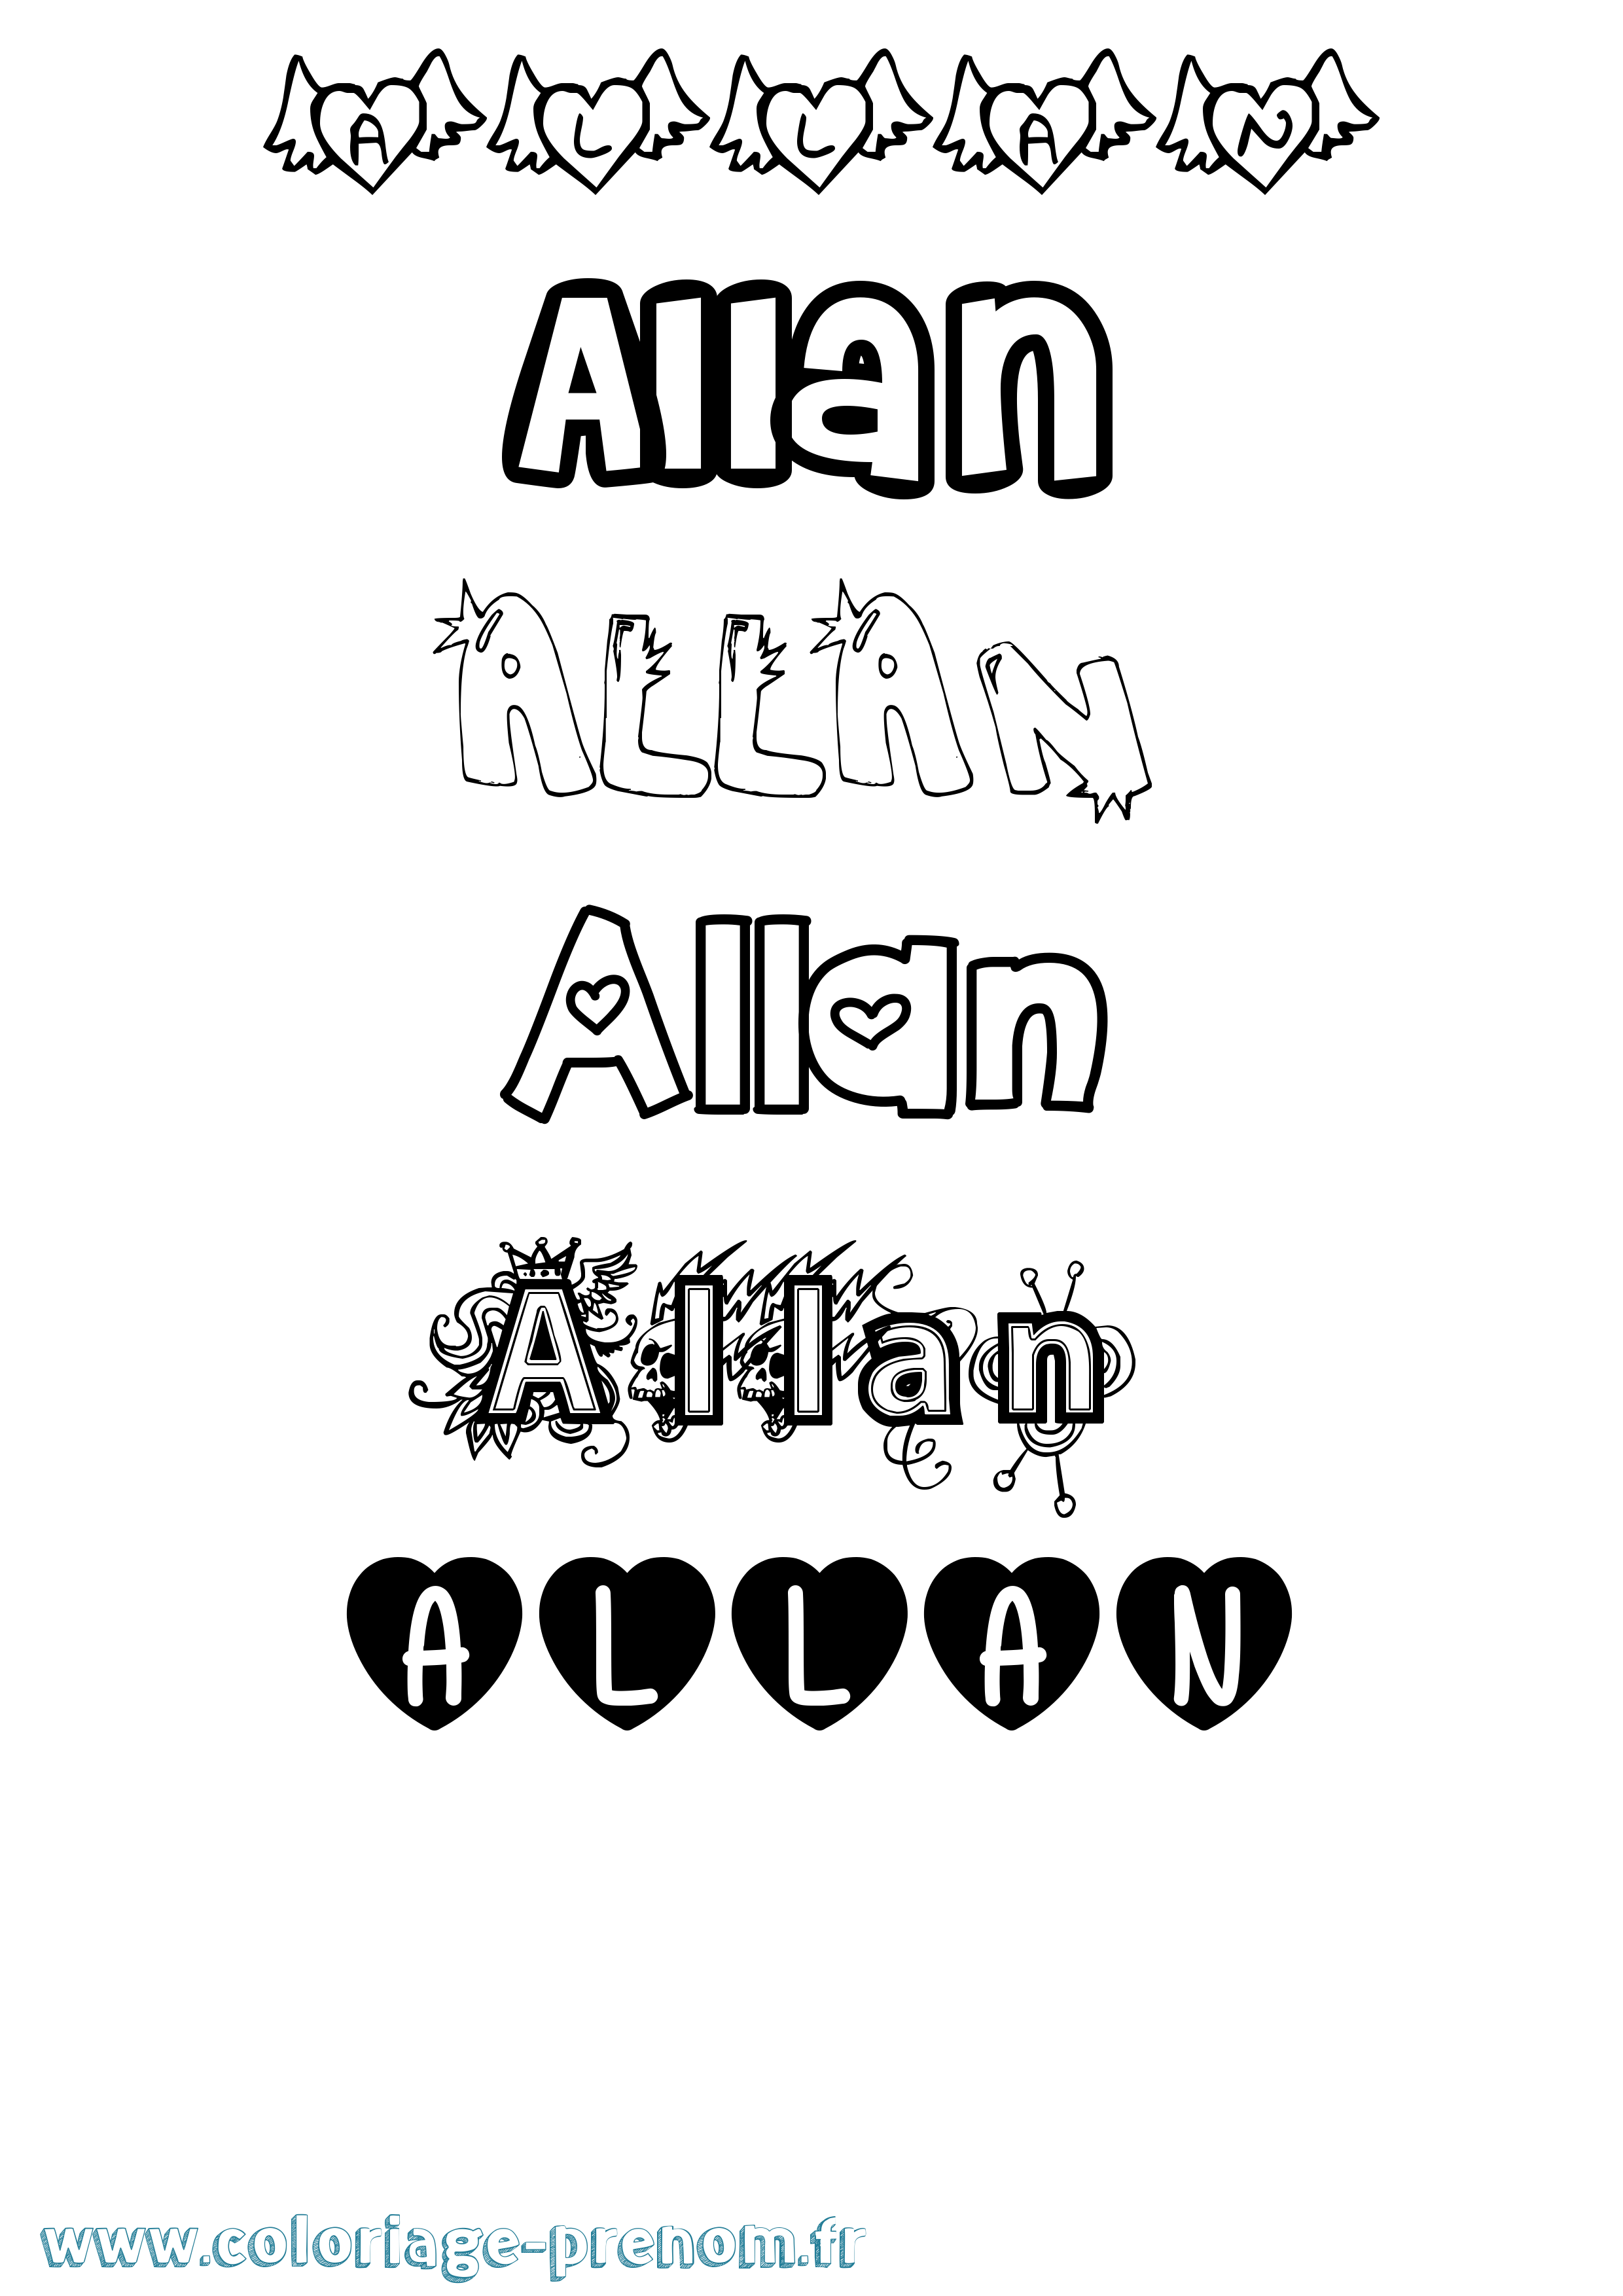 Coloriage prénom Allan Girly